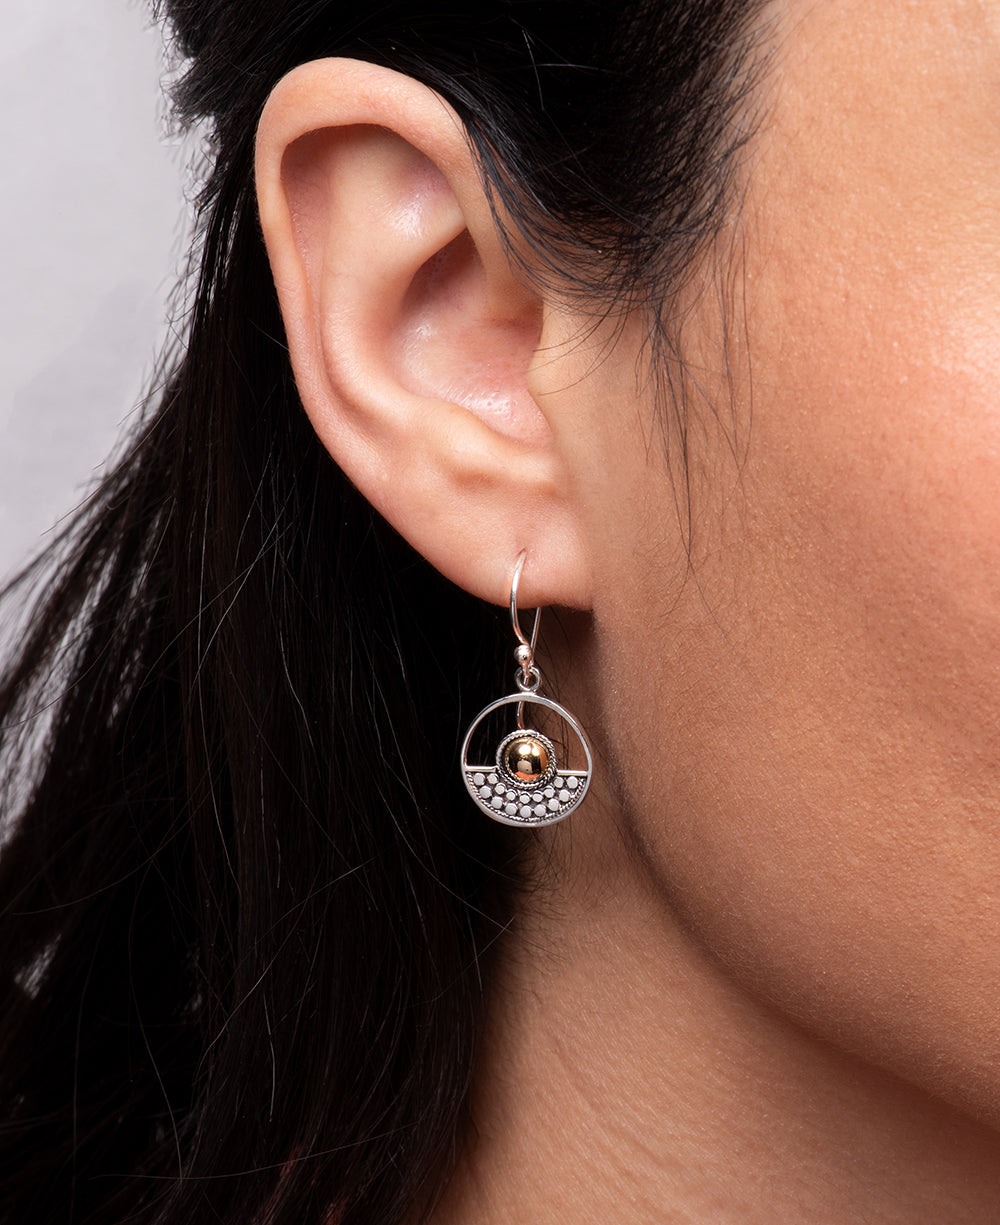 Gold plated center circular earrings